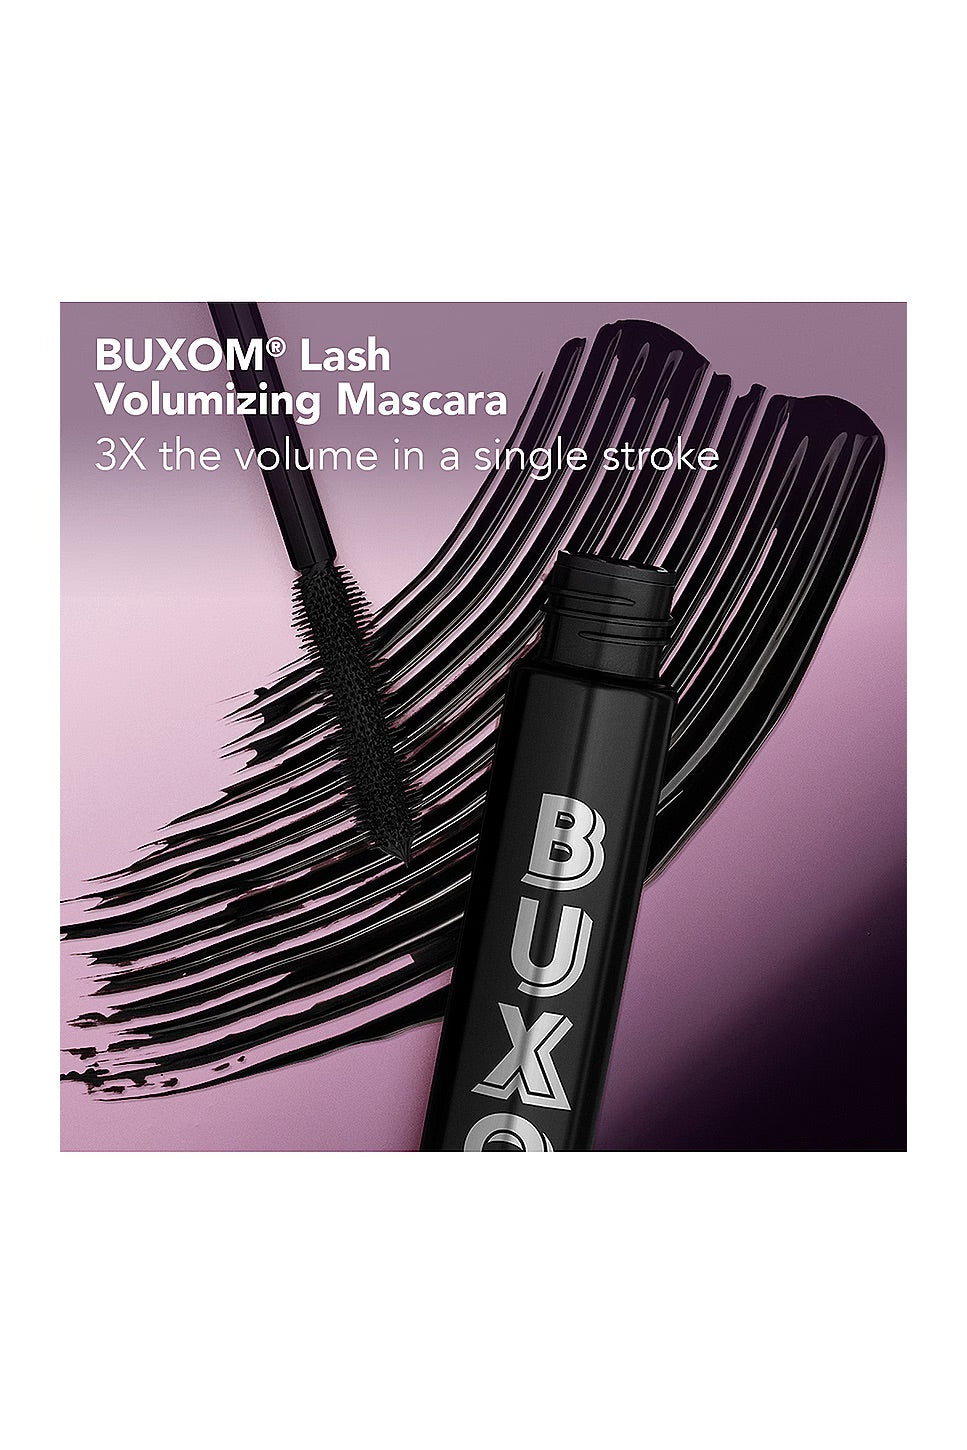 Buxom - Lash Mascara - Blackest Black